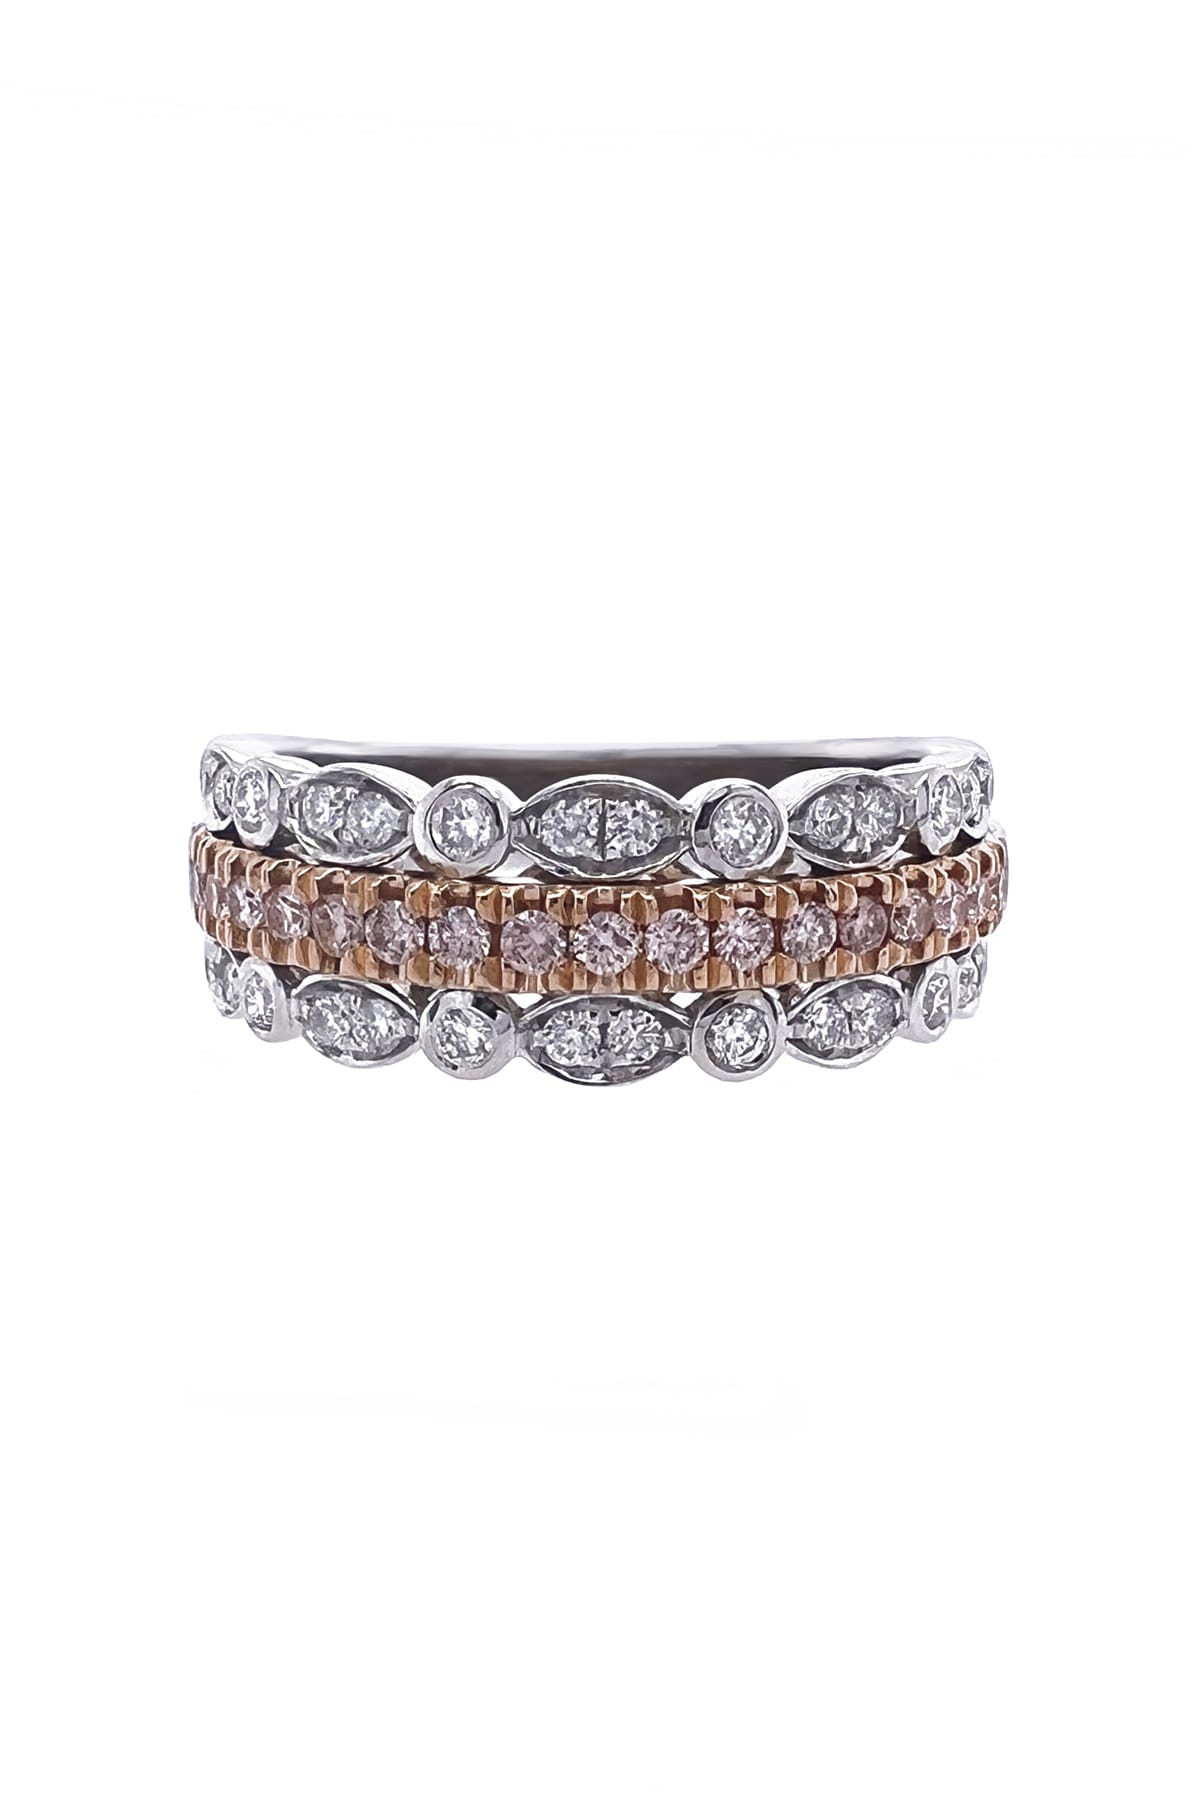 Natural Argyle Pink Diamond Dress Ring available at LeGassick Diamonds and Jewellery Gold Coast, Australia.